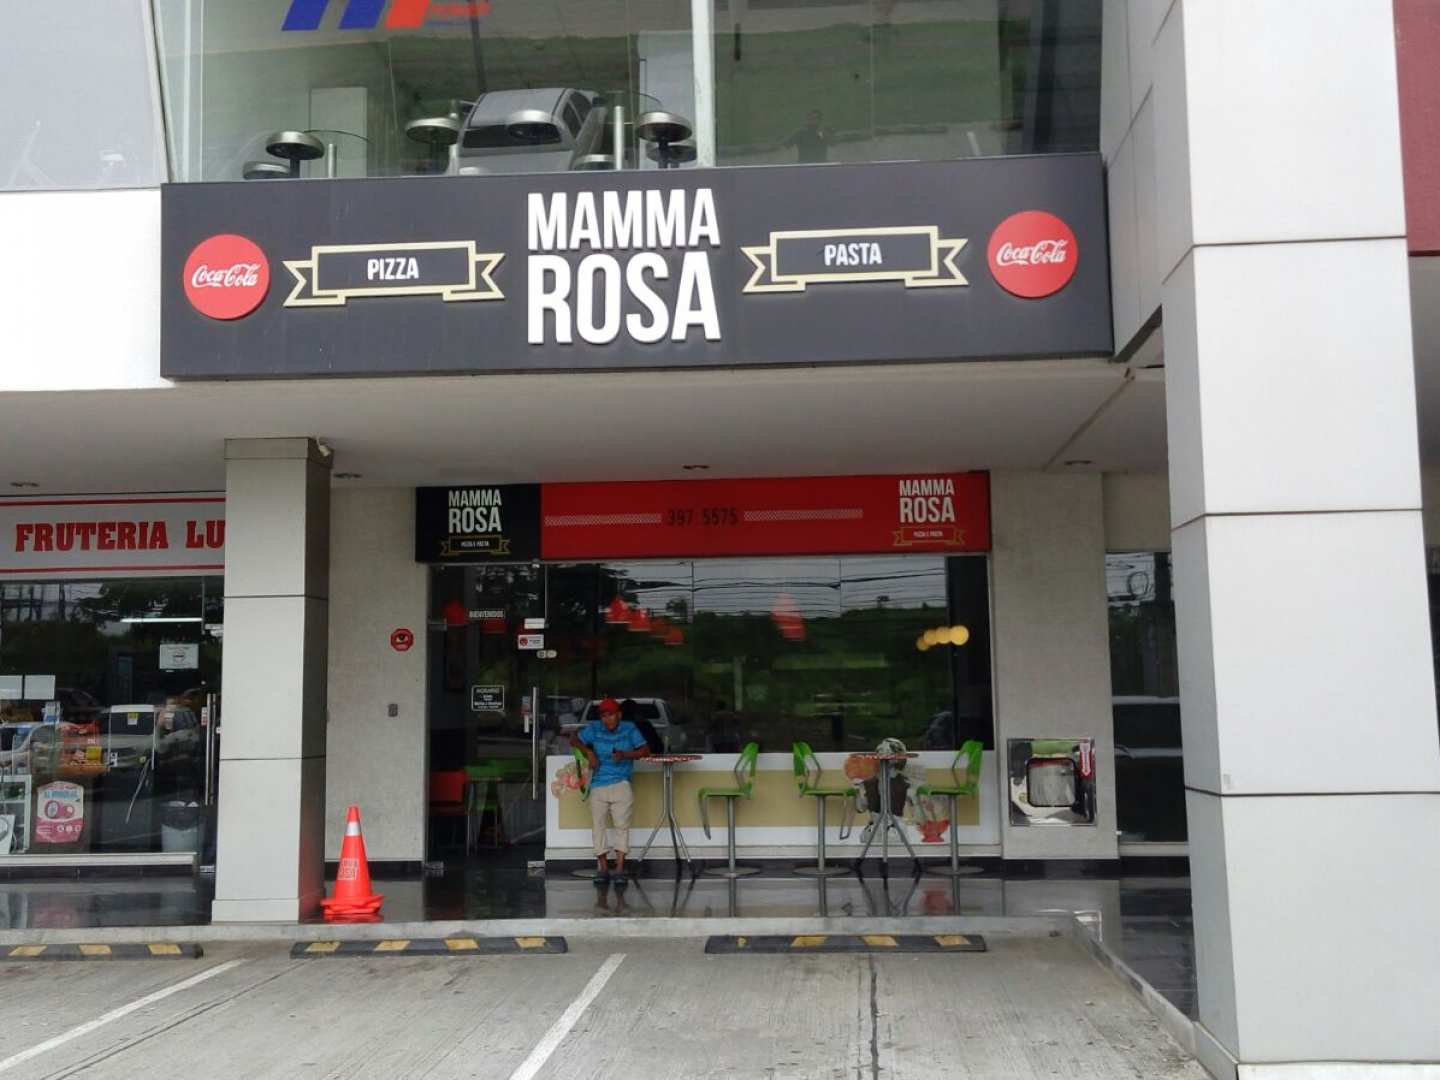 Mamma Rosa